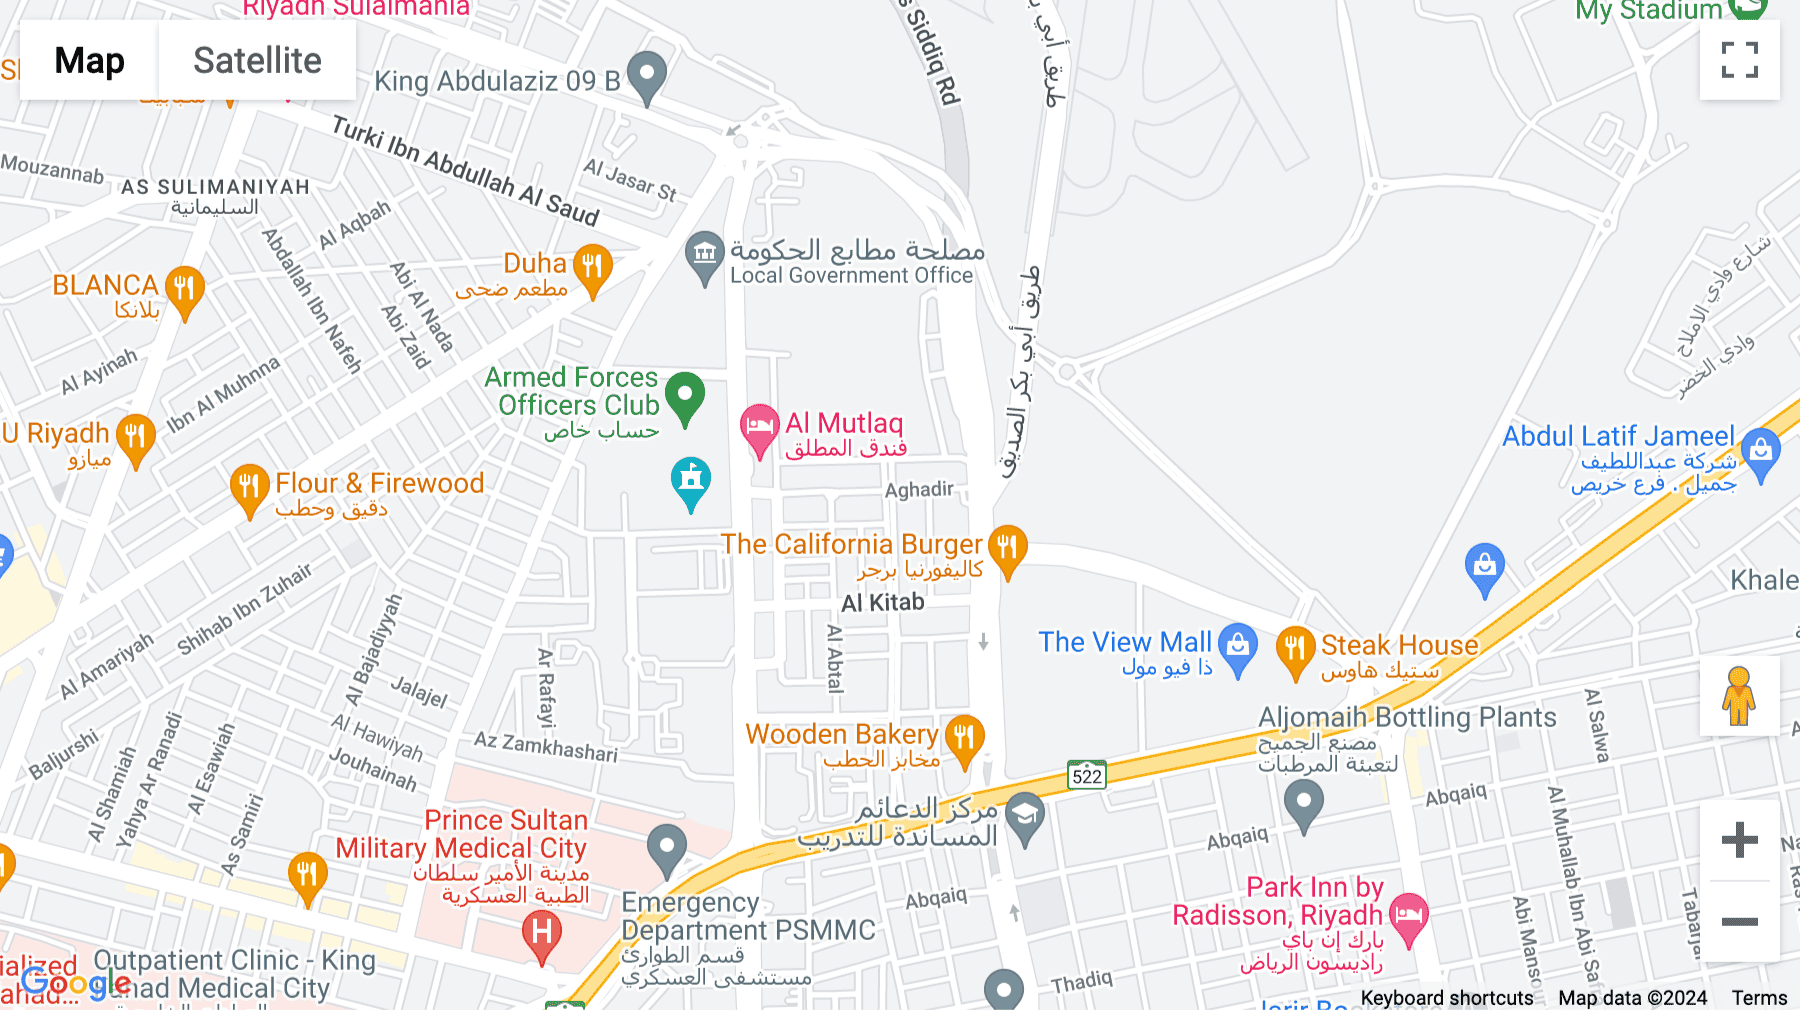 Click for interative map of Ibn Kathir Street,Building No. 44, King Abdul Aziz,, Riyadh